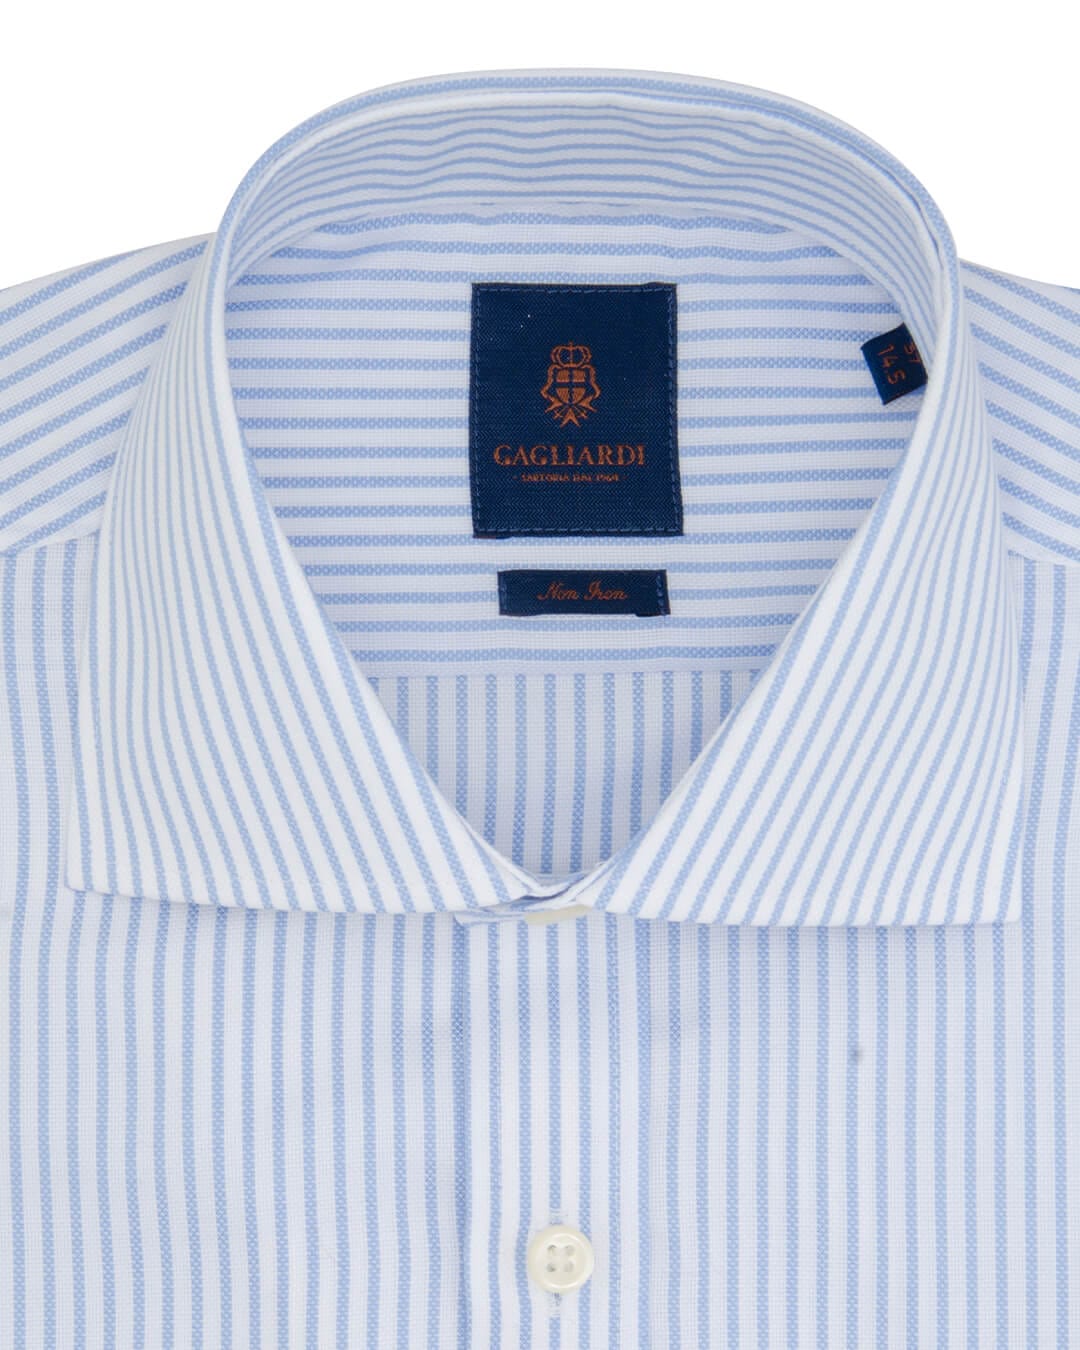 Gagliardi Shirts Gagliardi Slim Fit Sky Bengal Striped Non Iron Oxford Cotton Shirt